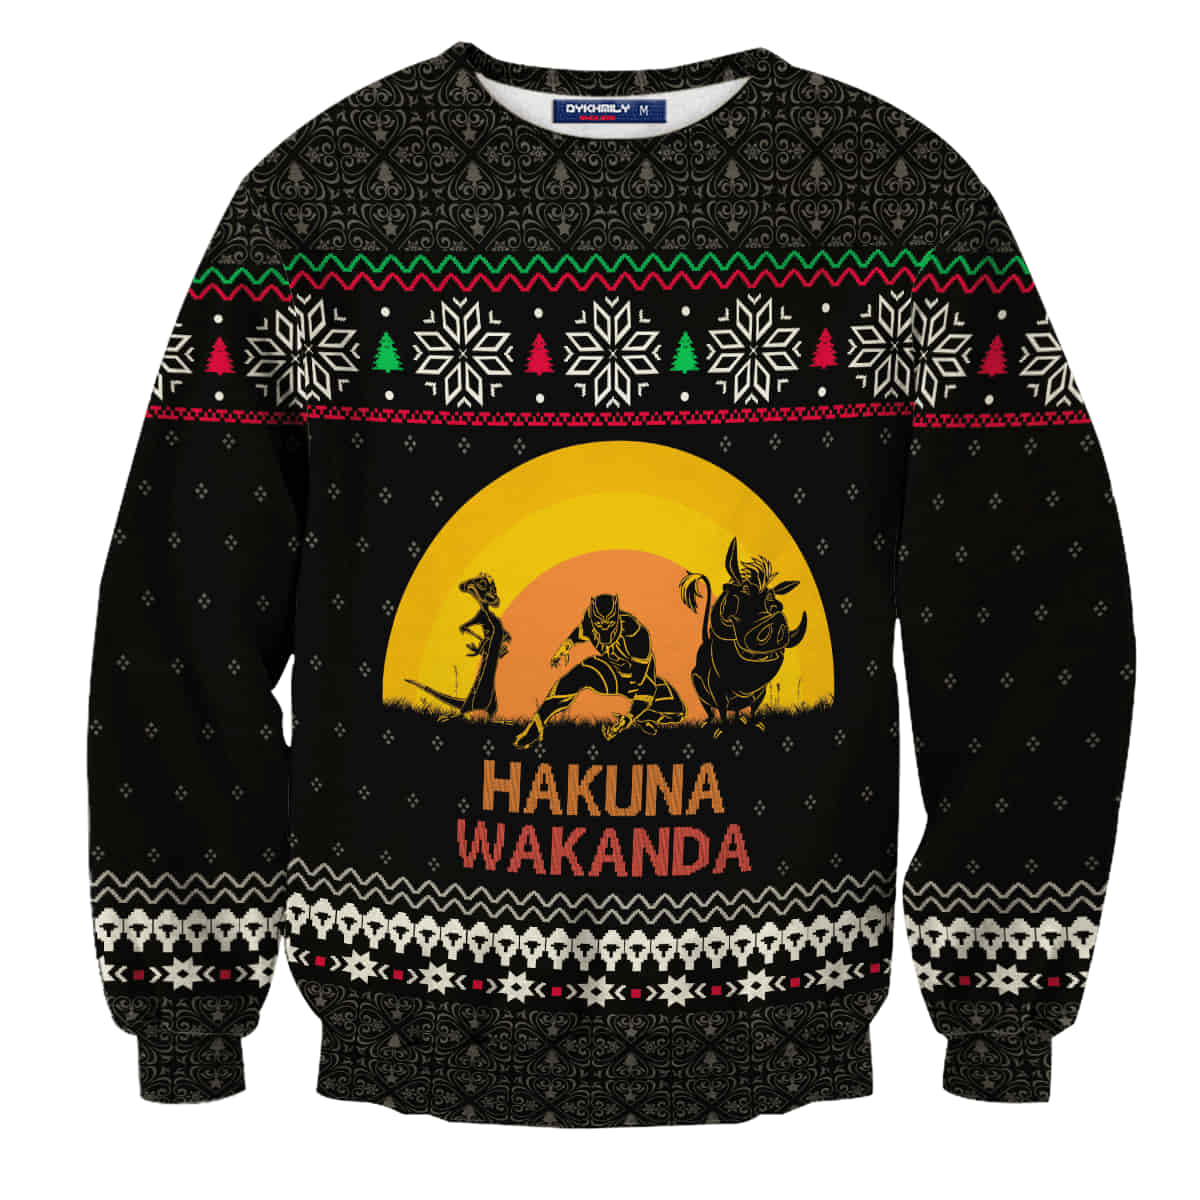 Hakuna Wakanda Christmas Wool Knitted Sweater, Lion King Winter Sweater